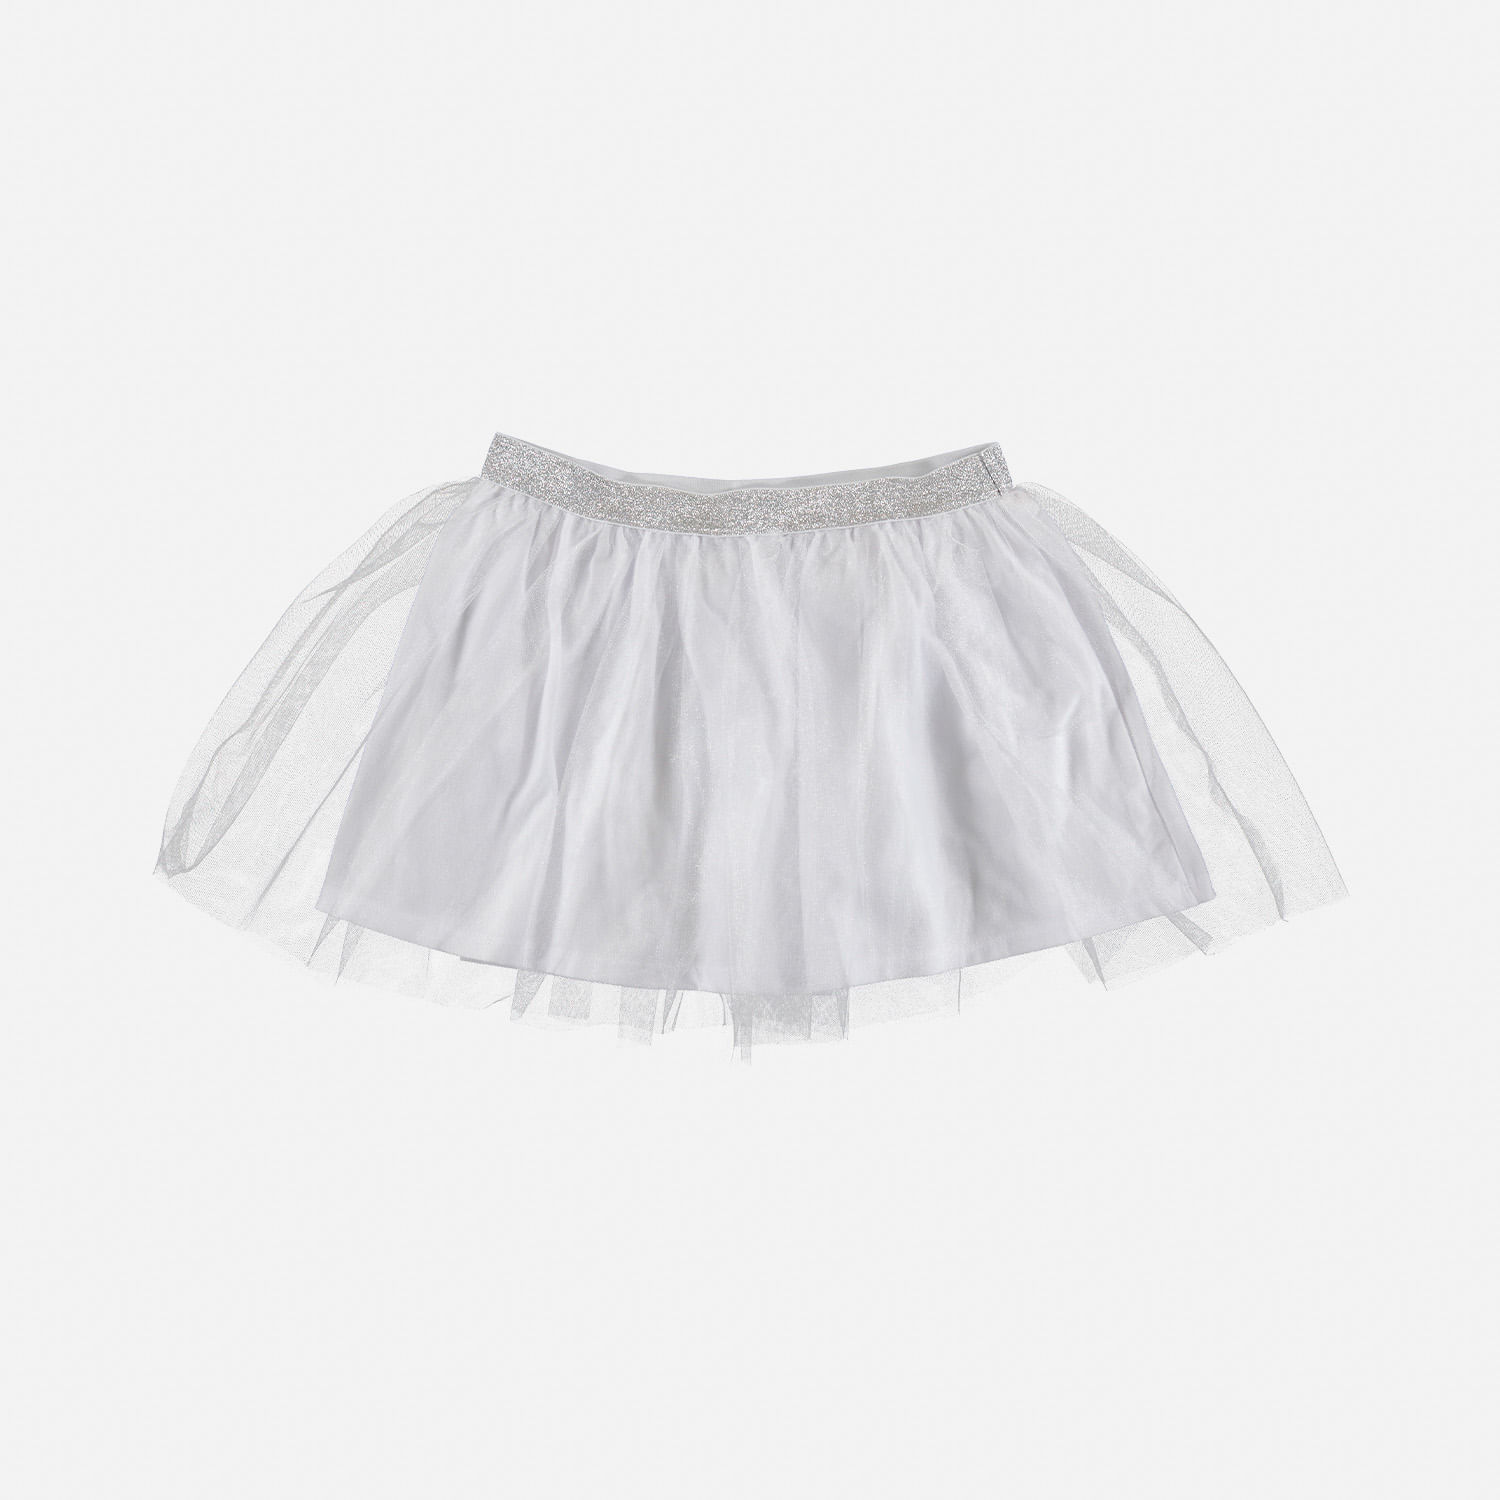 Falda de niña, corta blanca de mic - Tienda Online MIC